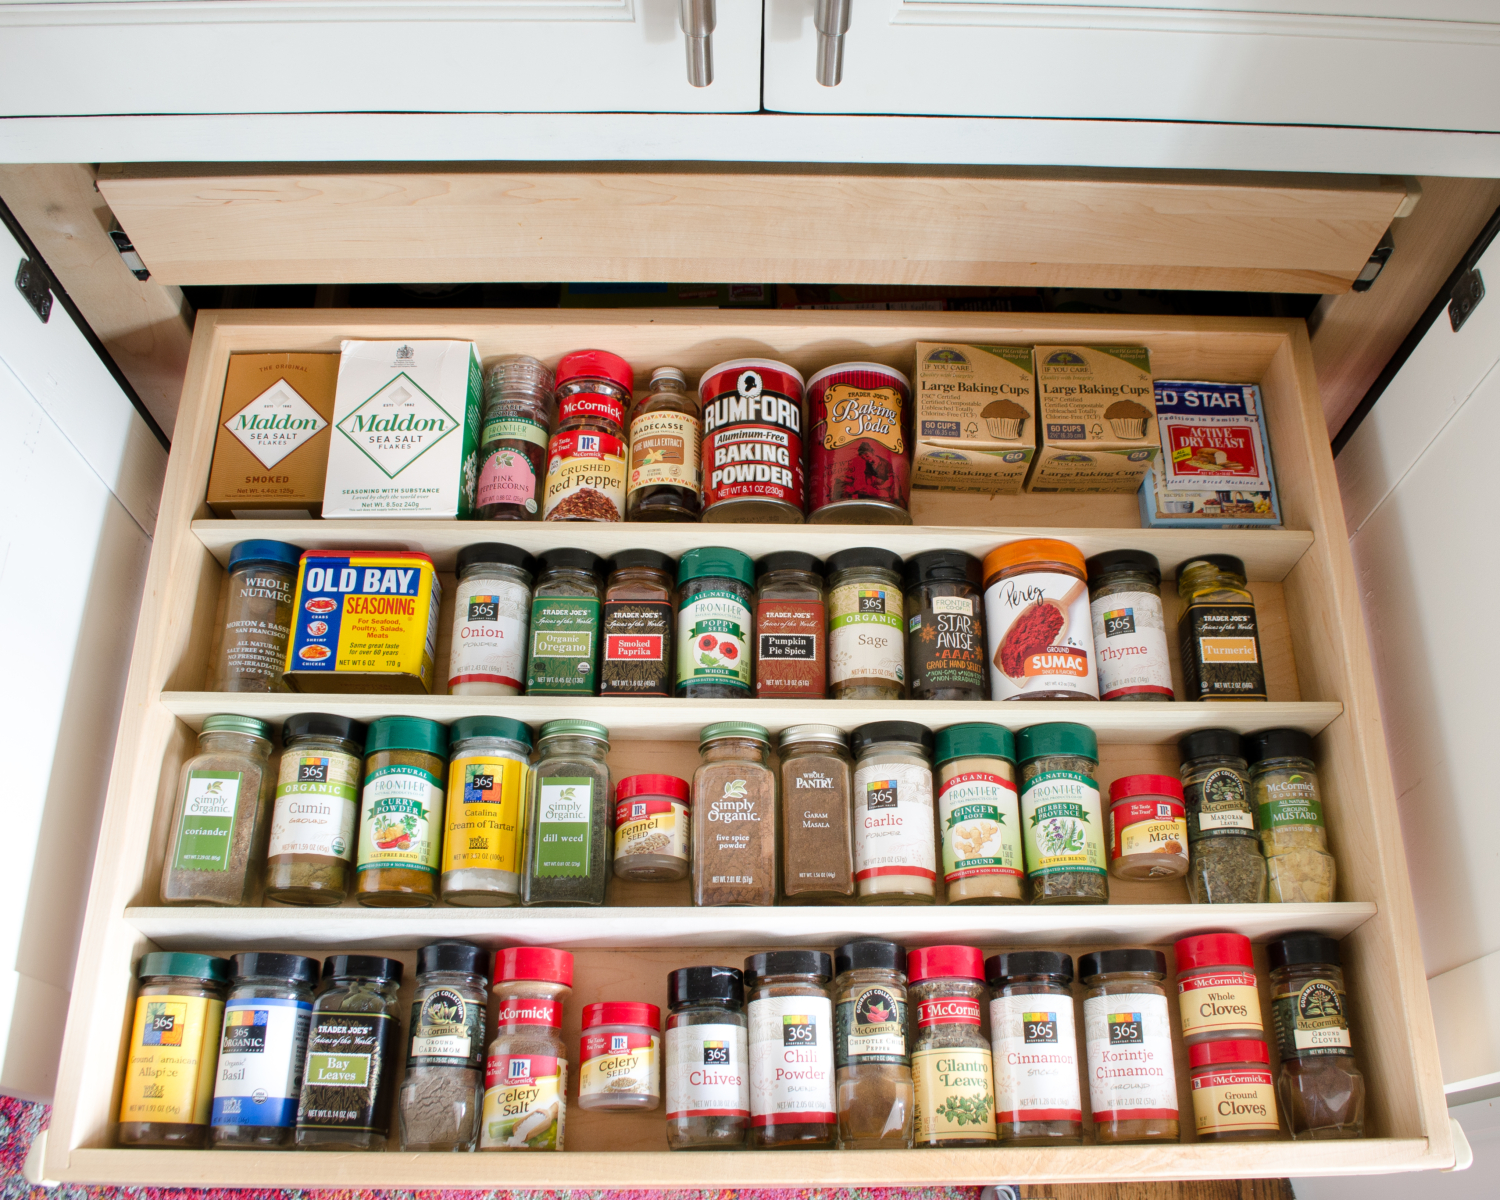 5 Ways to Organize Your Spice Rack